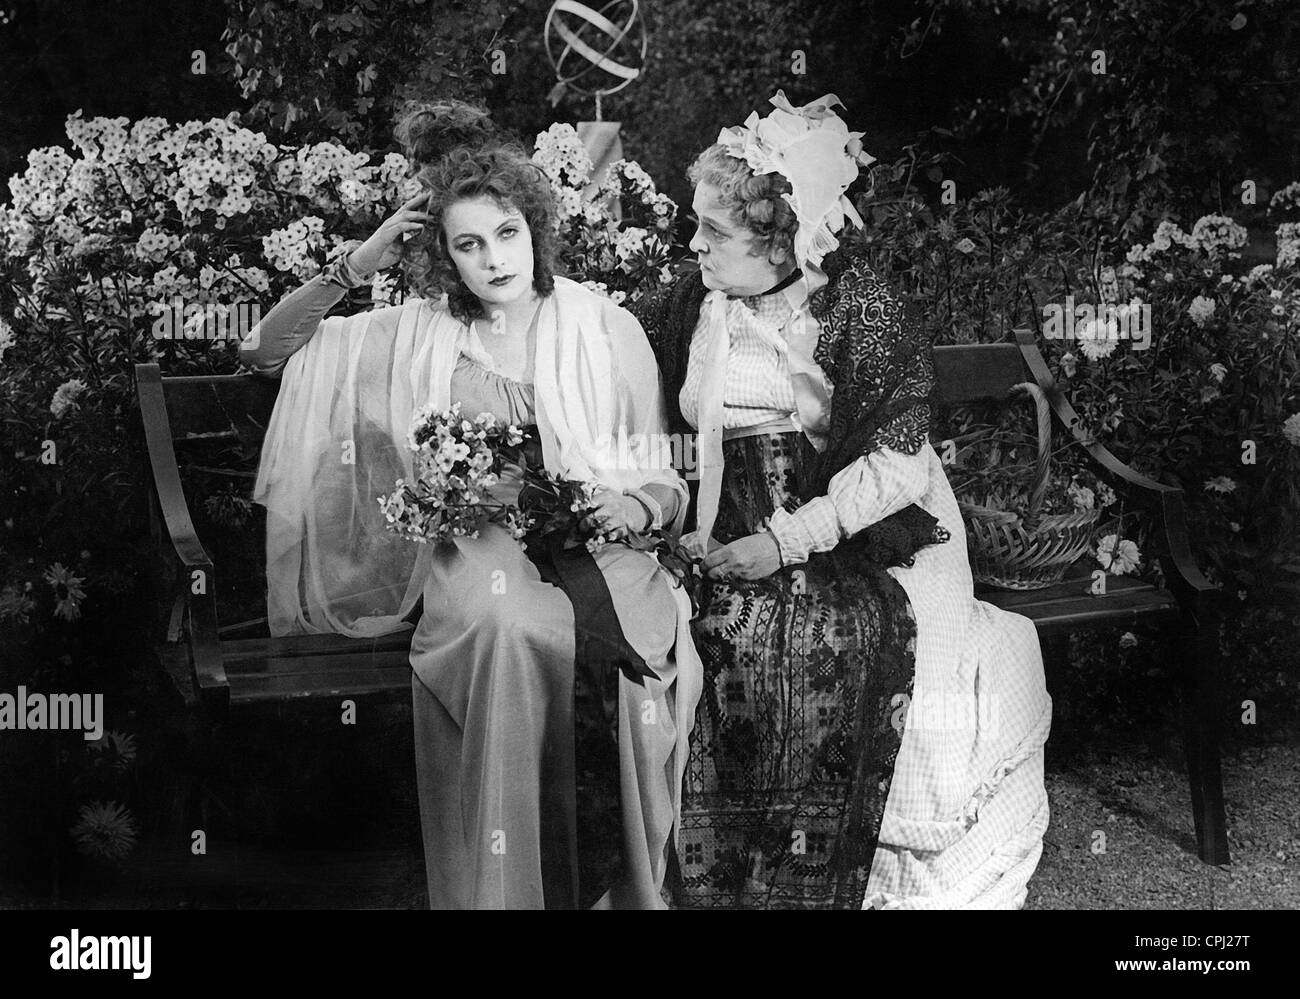 Greta Garbo and Karin Swanson in 'Goesta Berling's Saga', 1924 Stock Photo